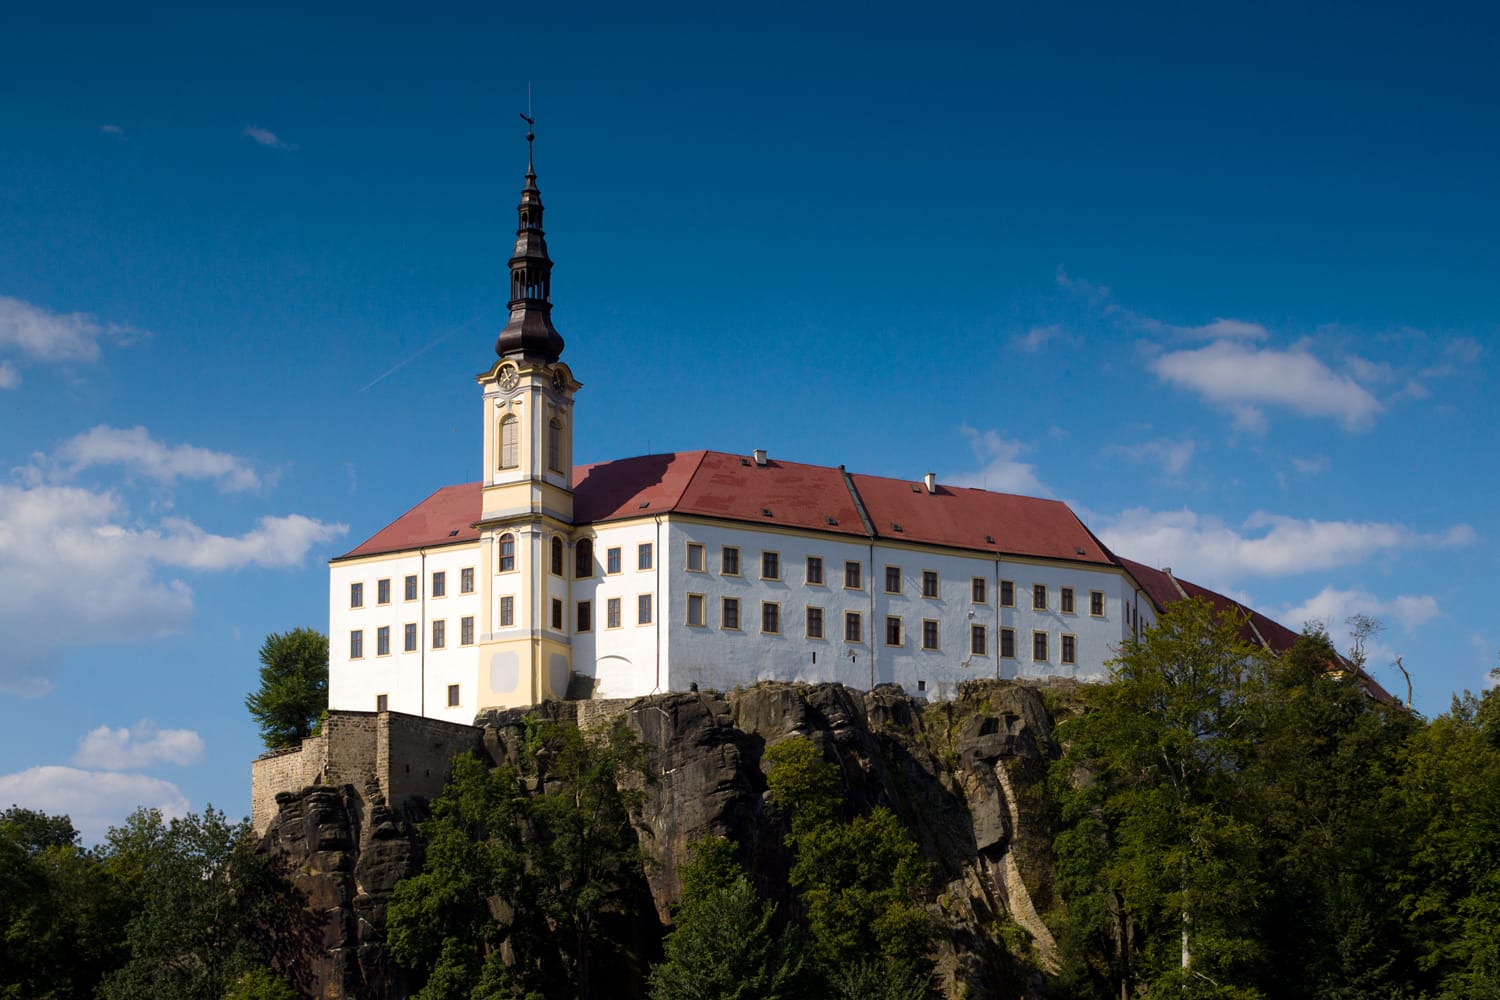 White chateau (castle) on the rock - Decin, Bohemia, Czech Republic.